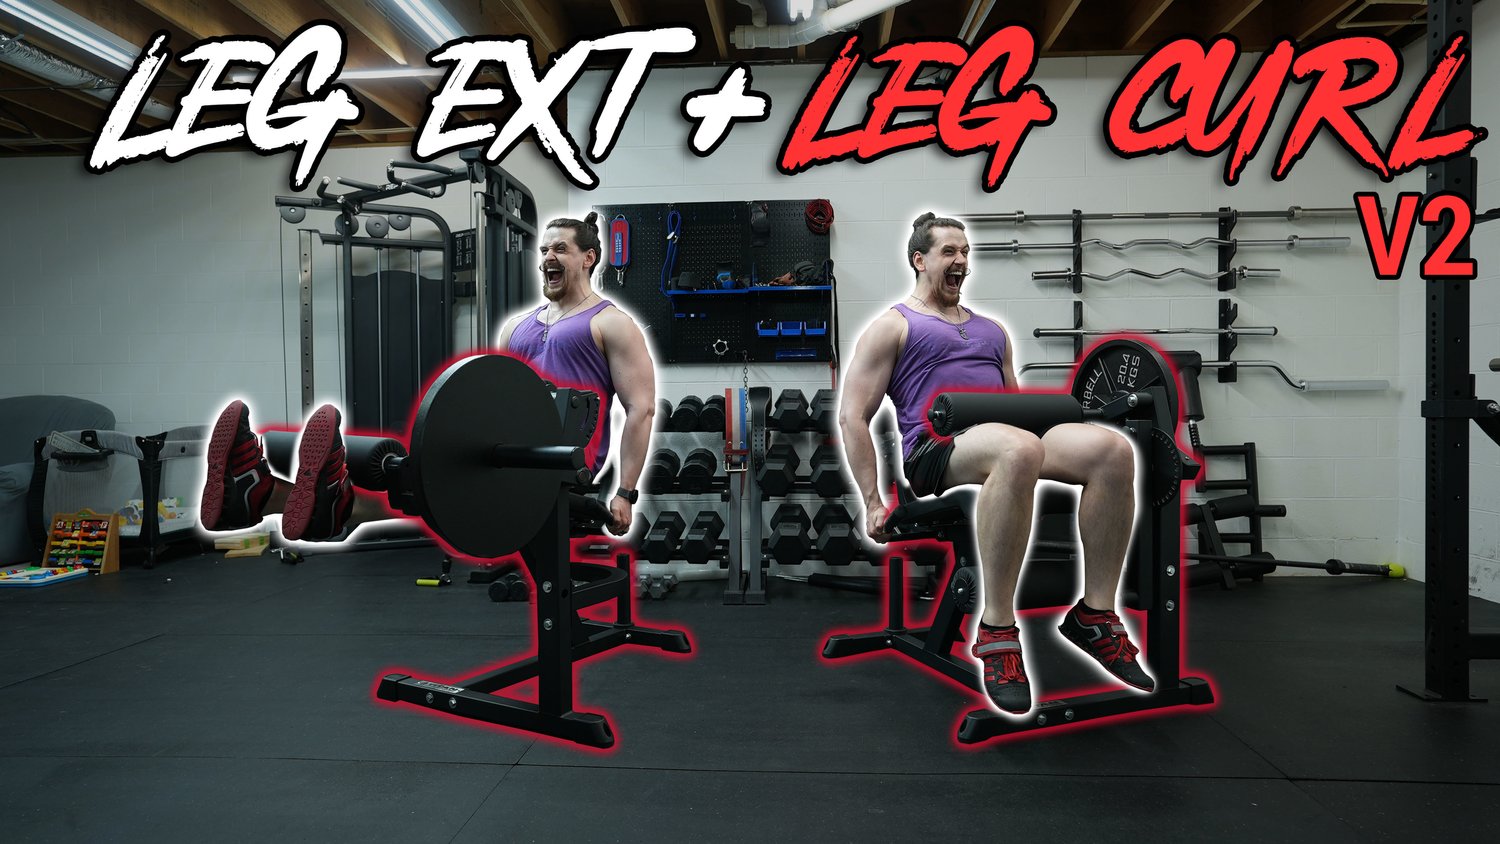 BEST Budget Leg Extension Leg Curl Machine - Titan Fitness Leg ...